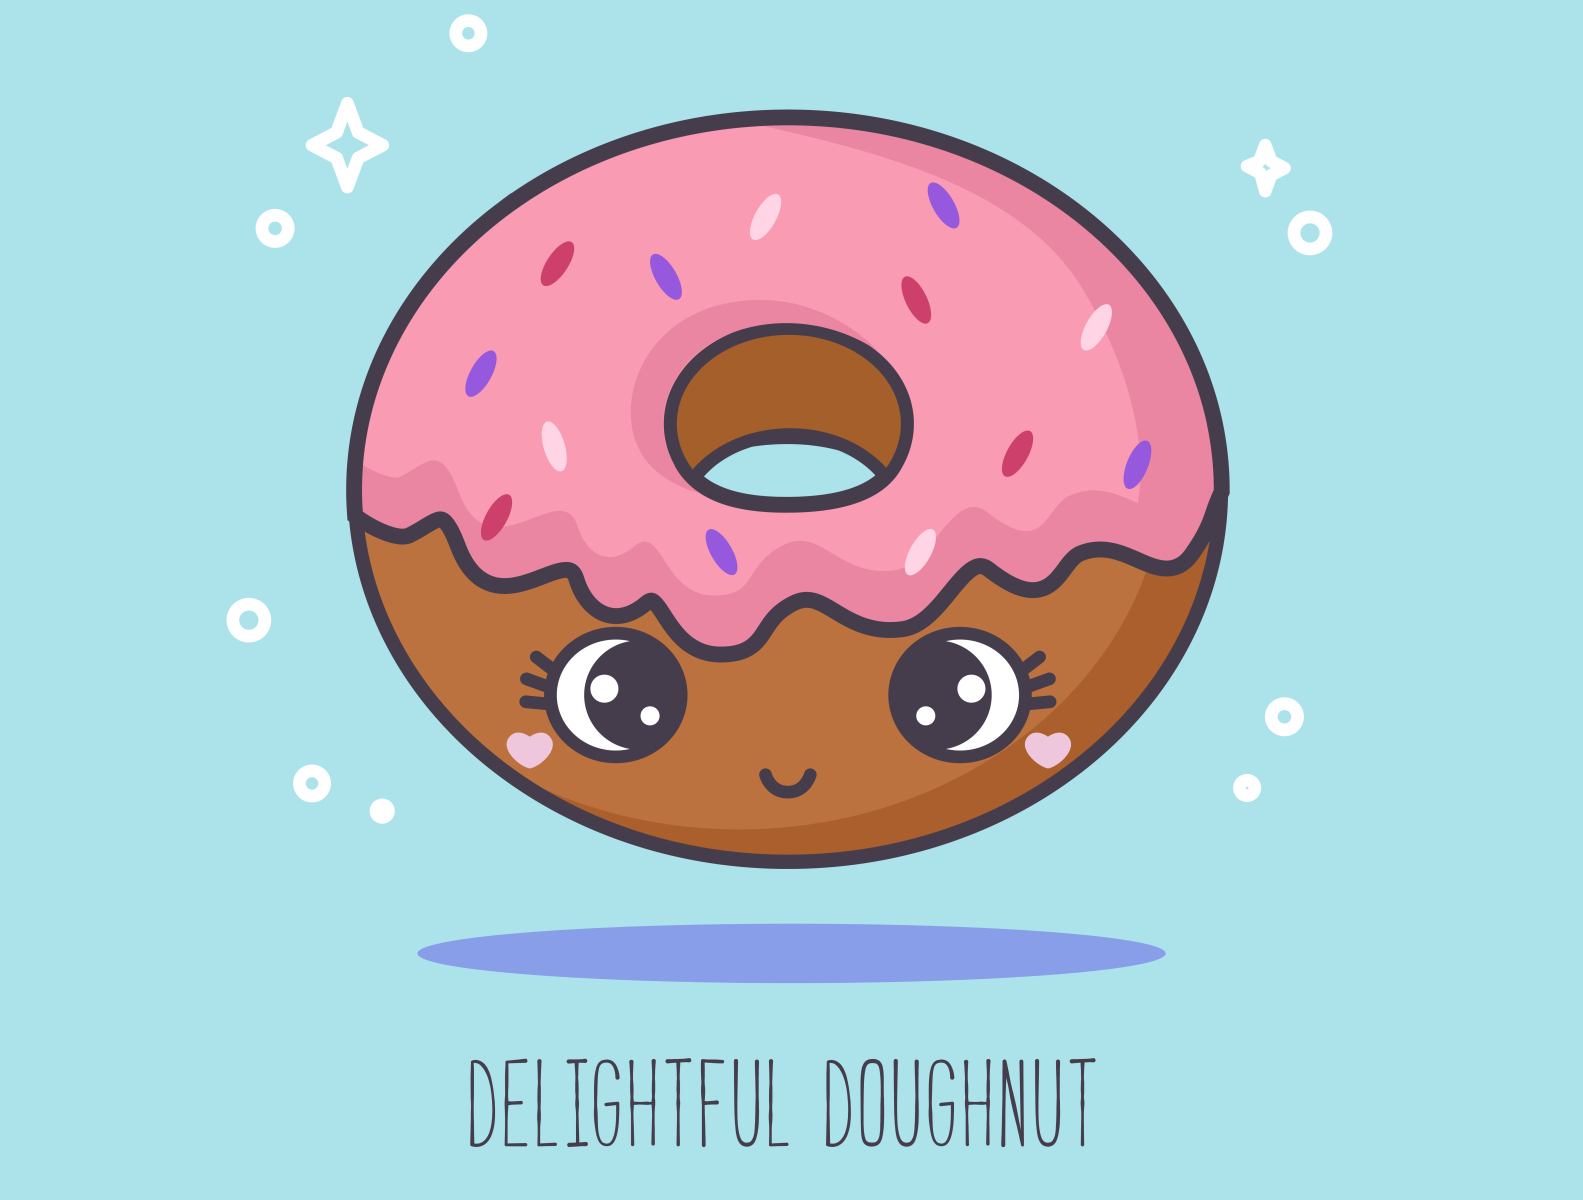 ABC sweets: Delightful Doughnut by Lana on Dribbble